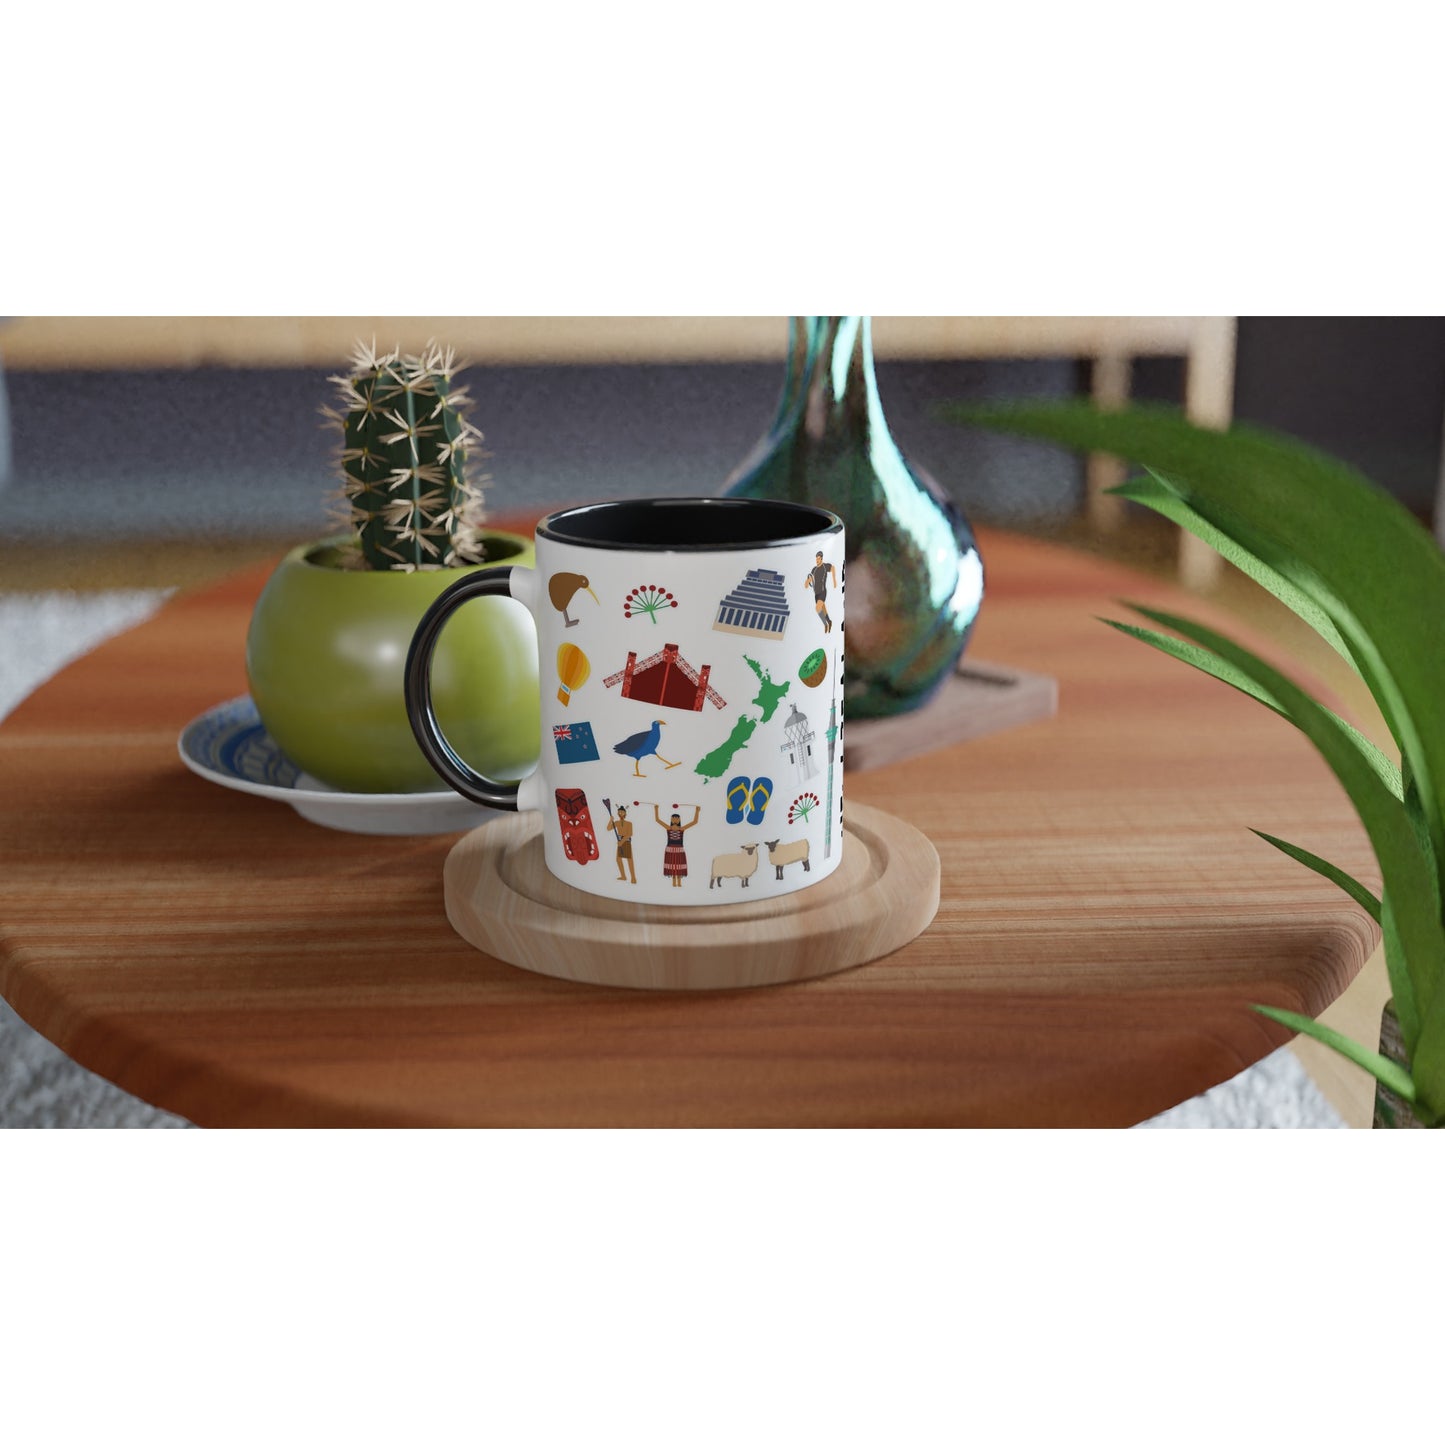 New Zealand Two Tone Ceramic Travel Mug, Starbucks Inspired - Pitchers Design